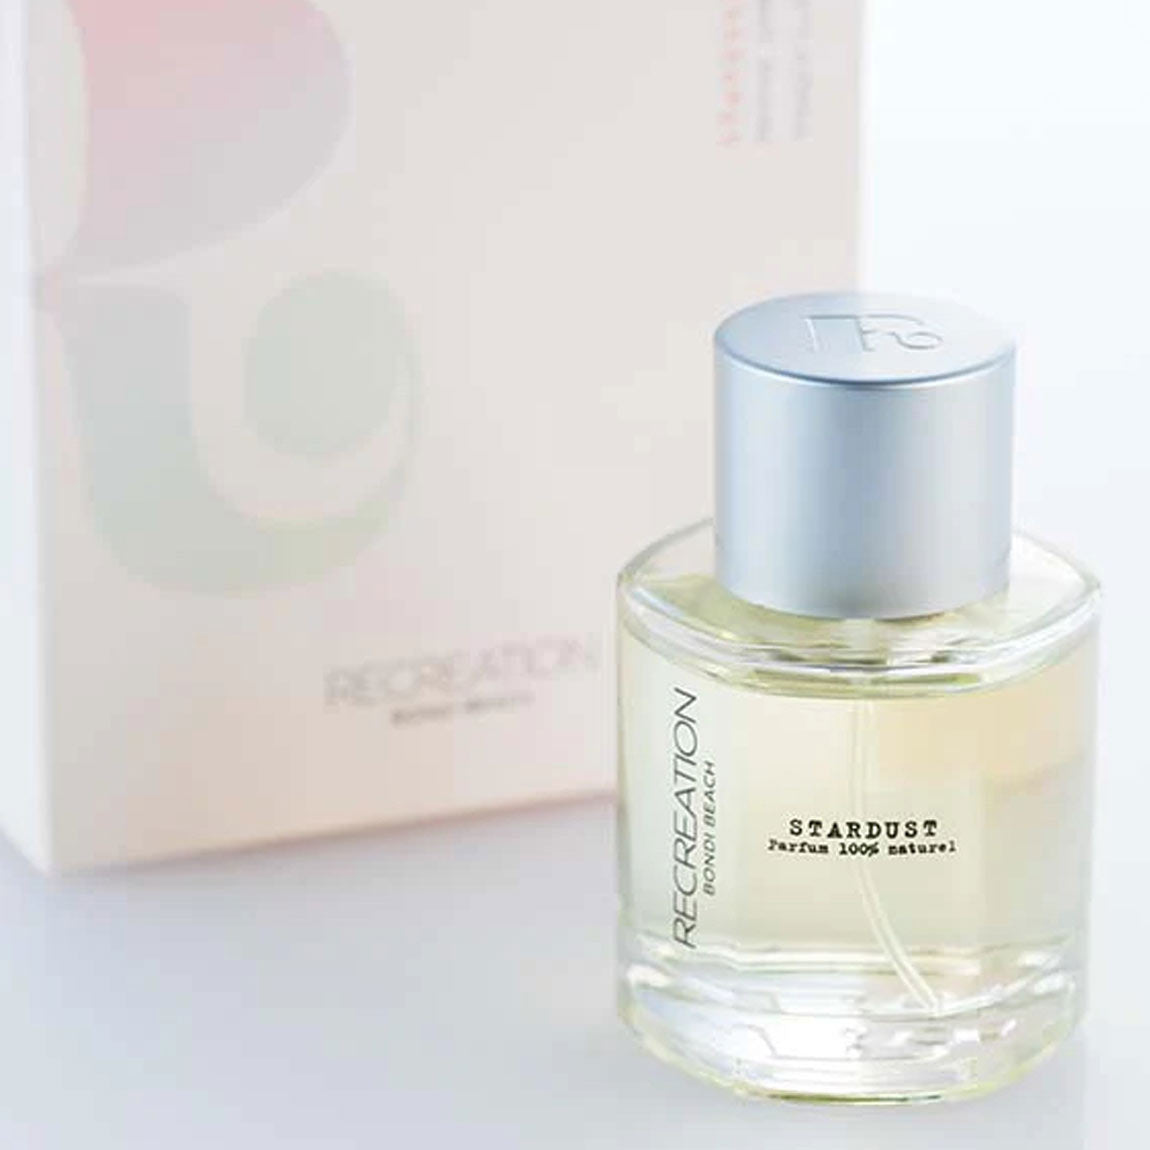 Recreation Beauty STARDUST Musky Clean and Natural Perfume - Vegan Parfum Australia